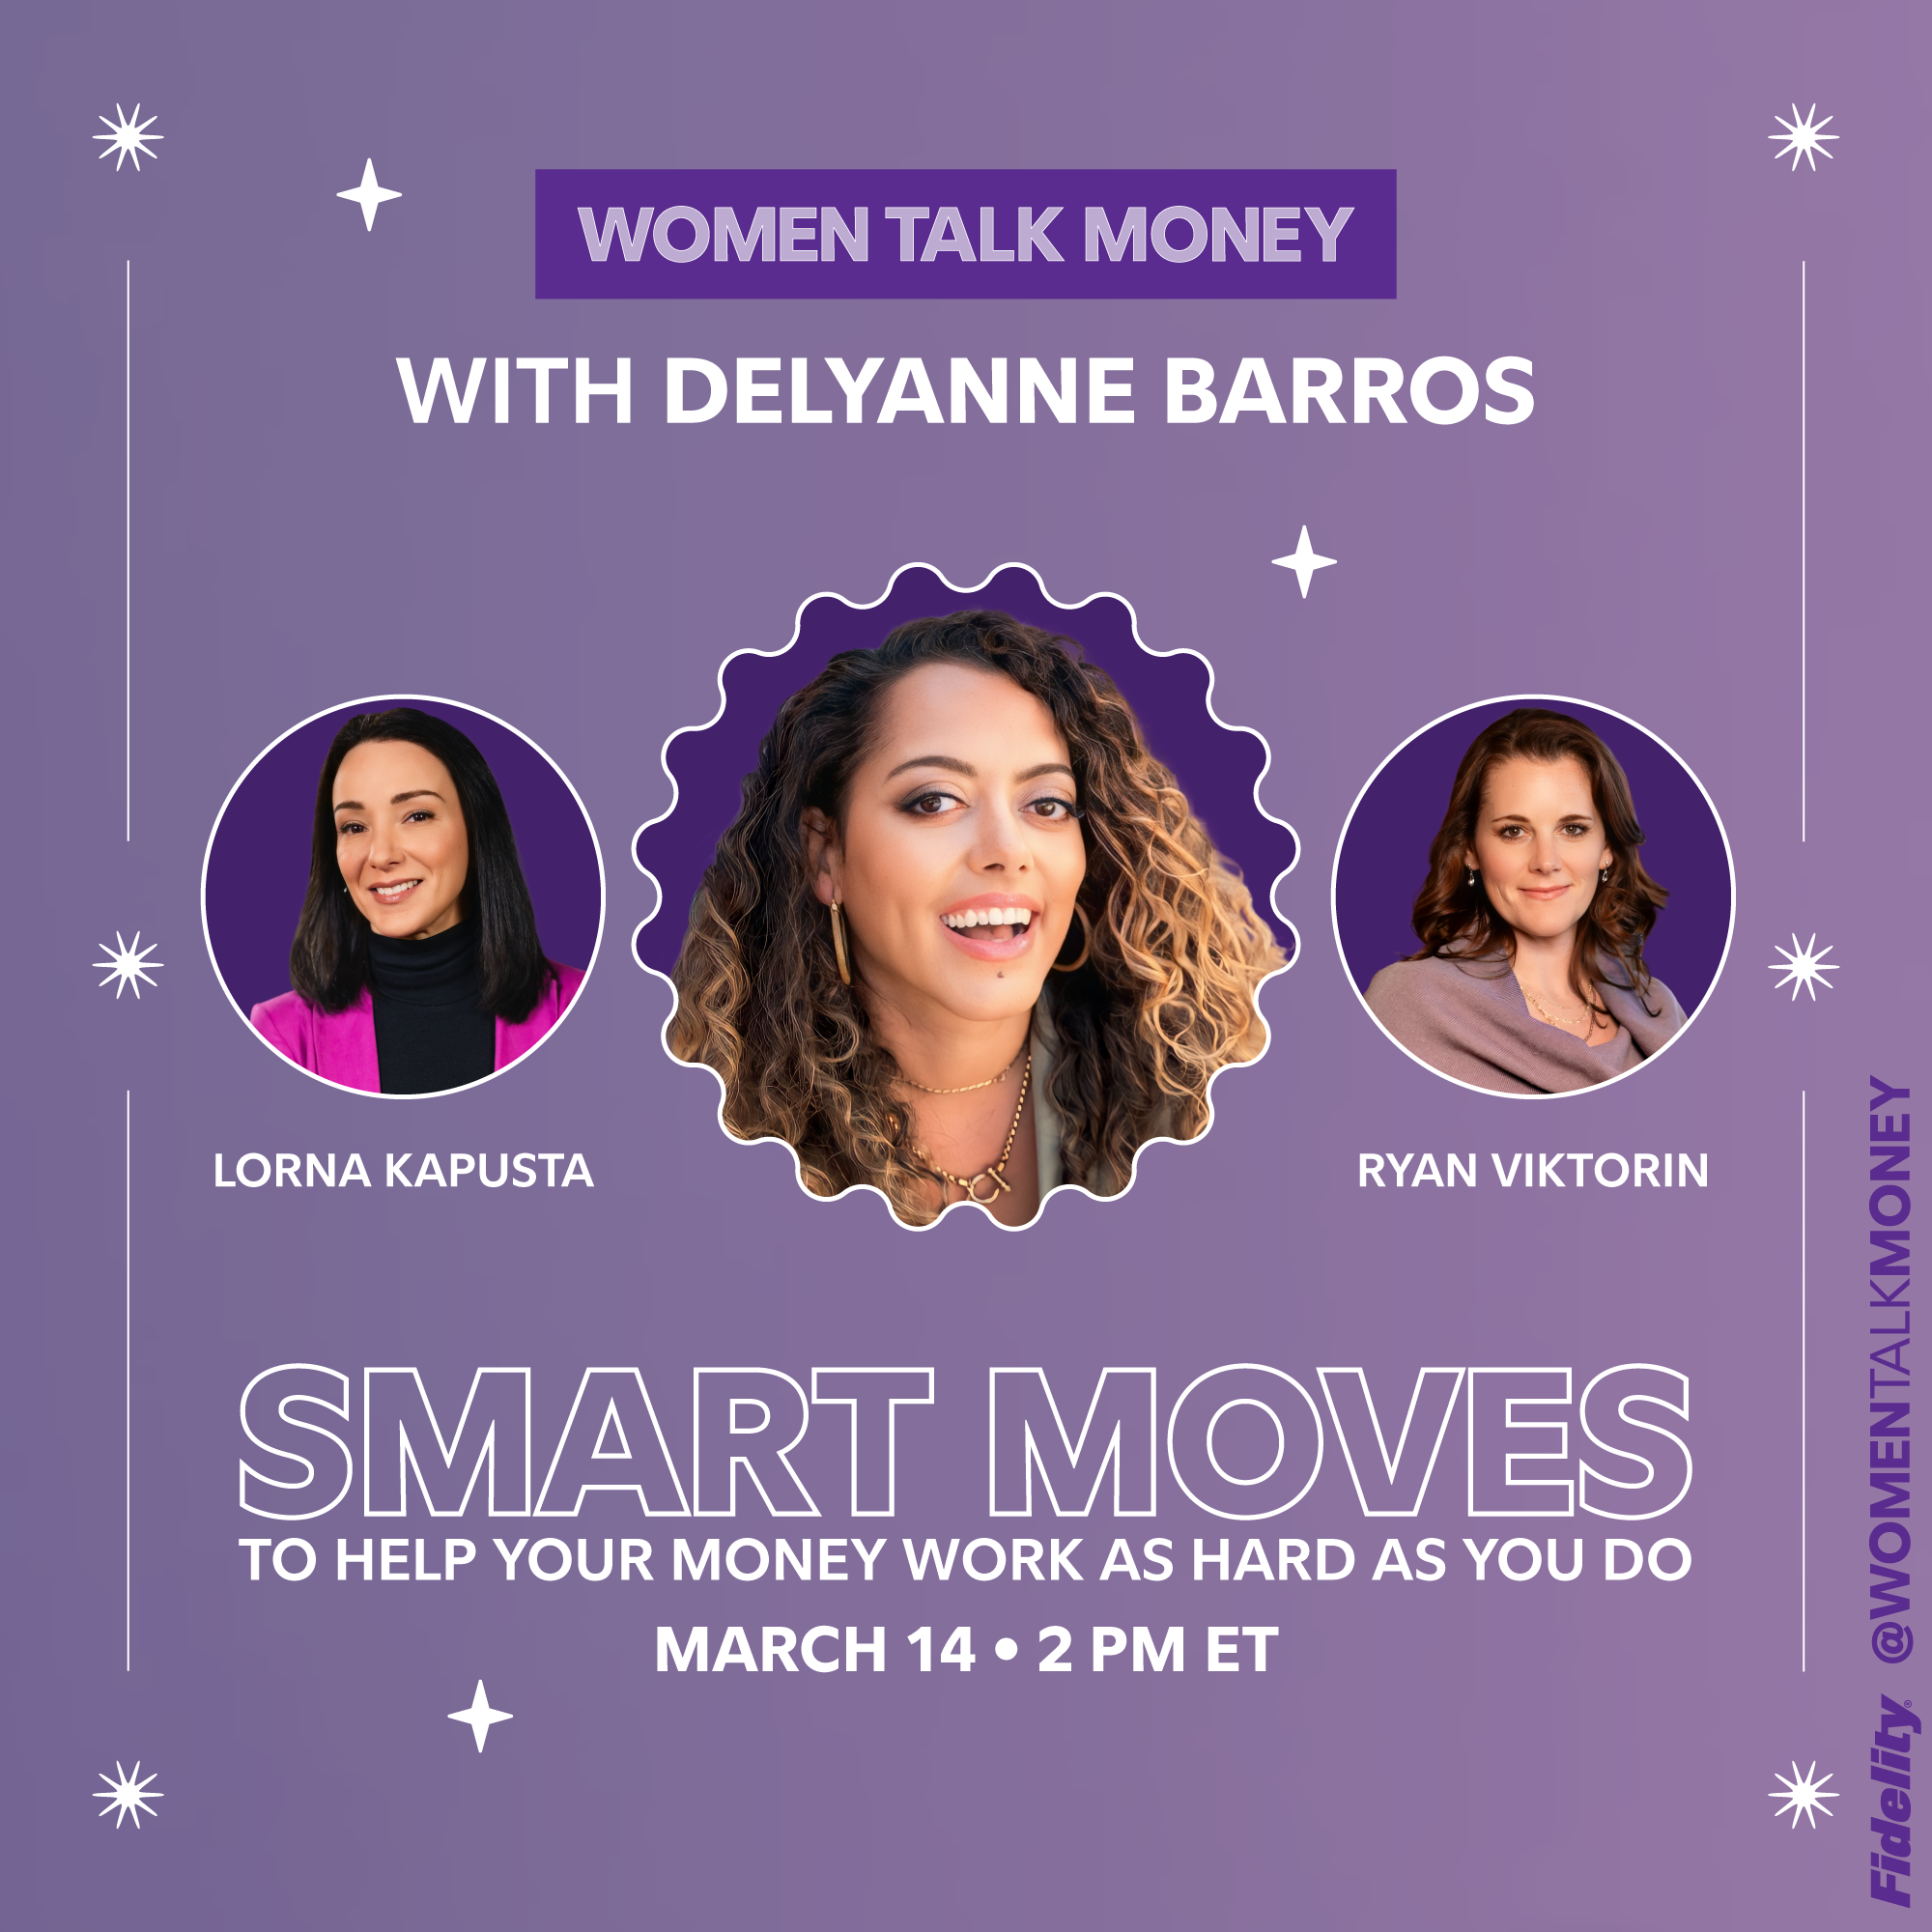 Women talk money with Delyanne Barros